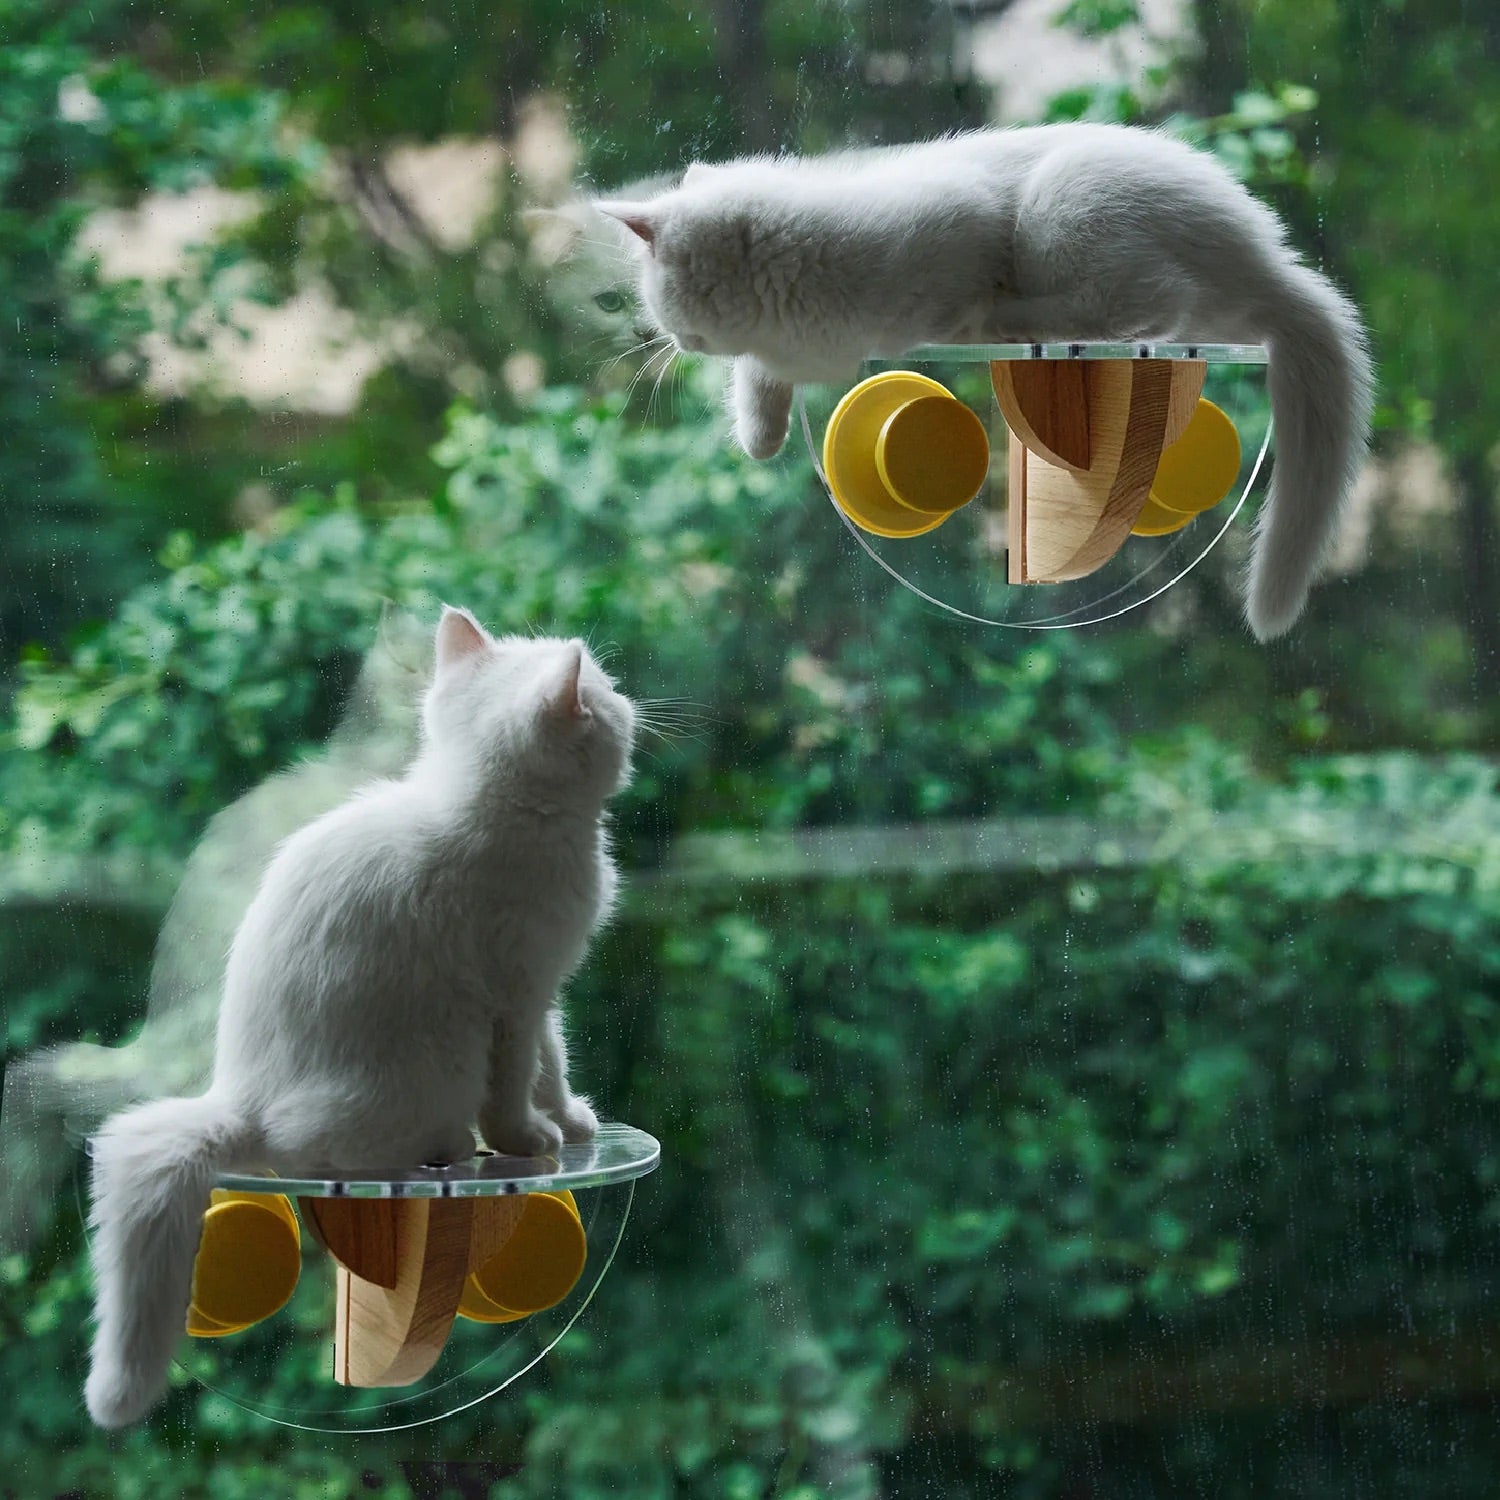 Pidan | Cat Window Acrylic Jumper